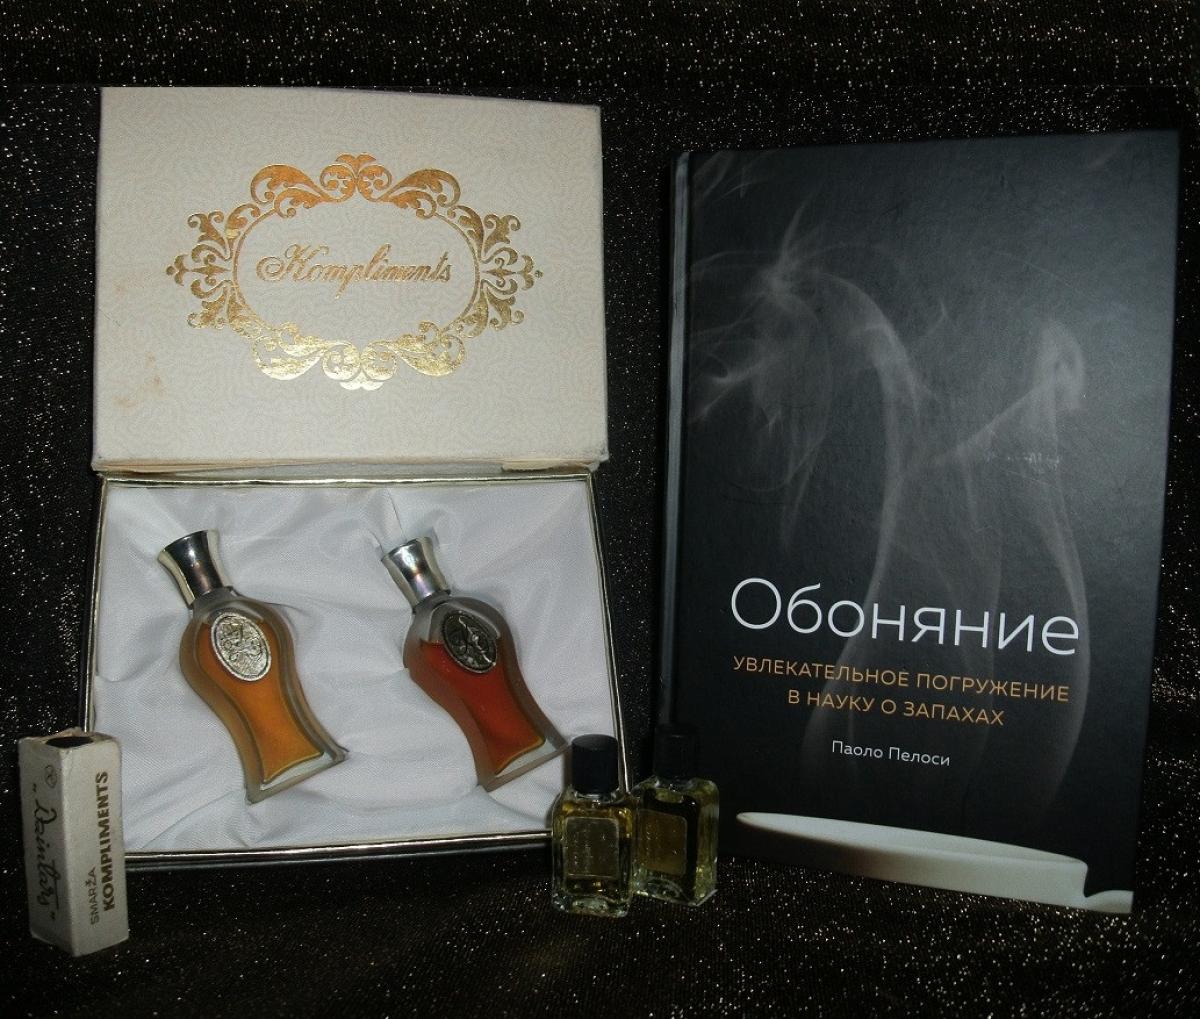 Kompliments 1 Dzintars perfume - a fragrance for women 1978